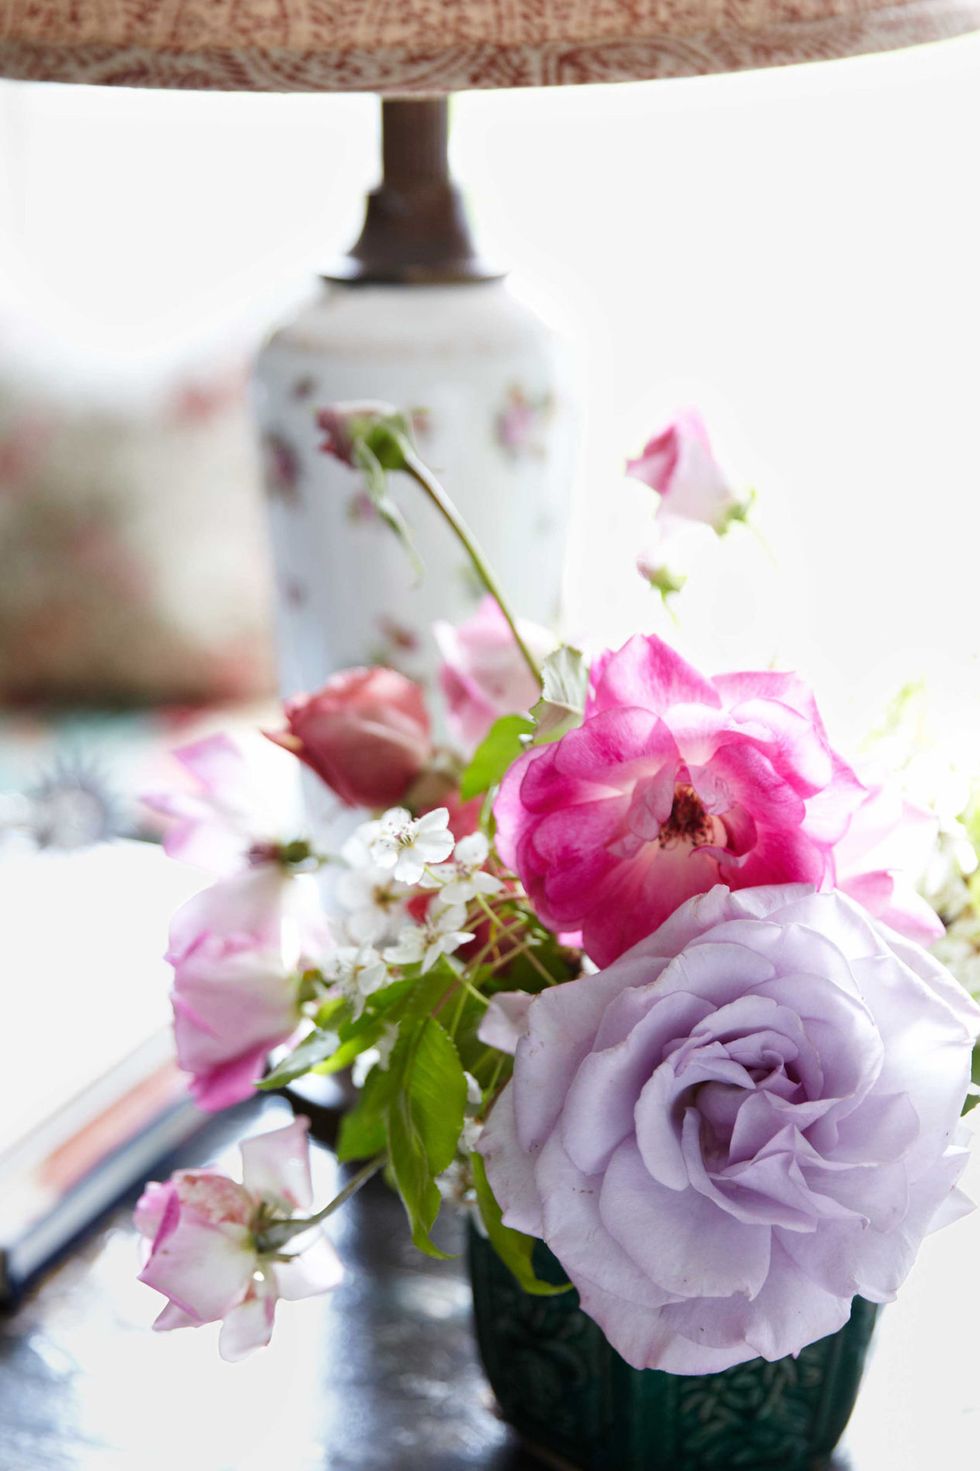 Frames Flower Rose, flower ring, purple, flower Arranging, decor png